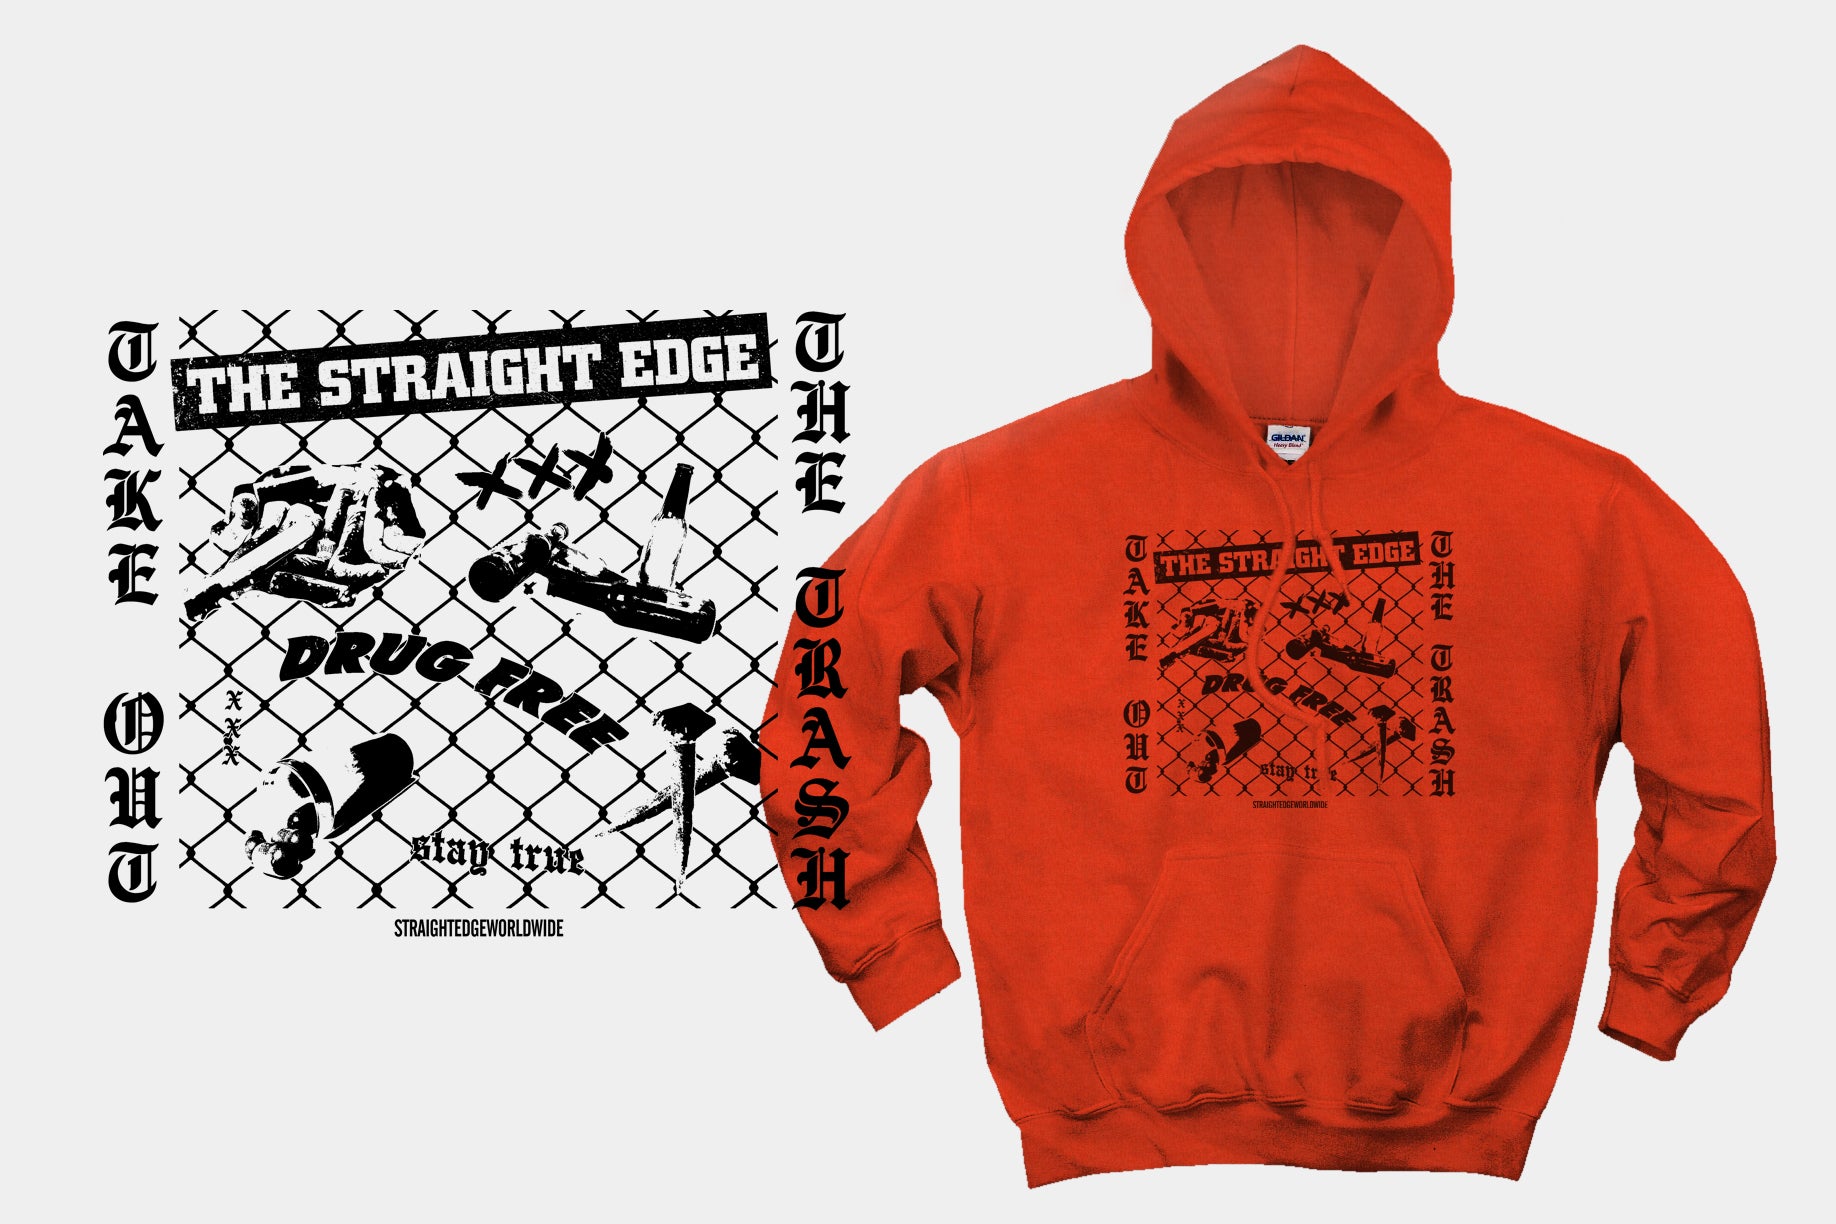 Take Out The Trash Drug Free Straight Edge Hoodie Sweatshirt in orange by STRAIGHTEDGEWORLDWIDE